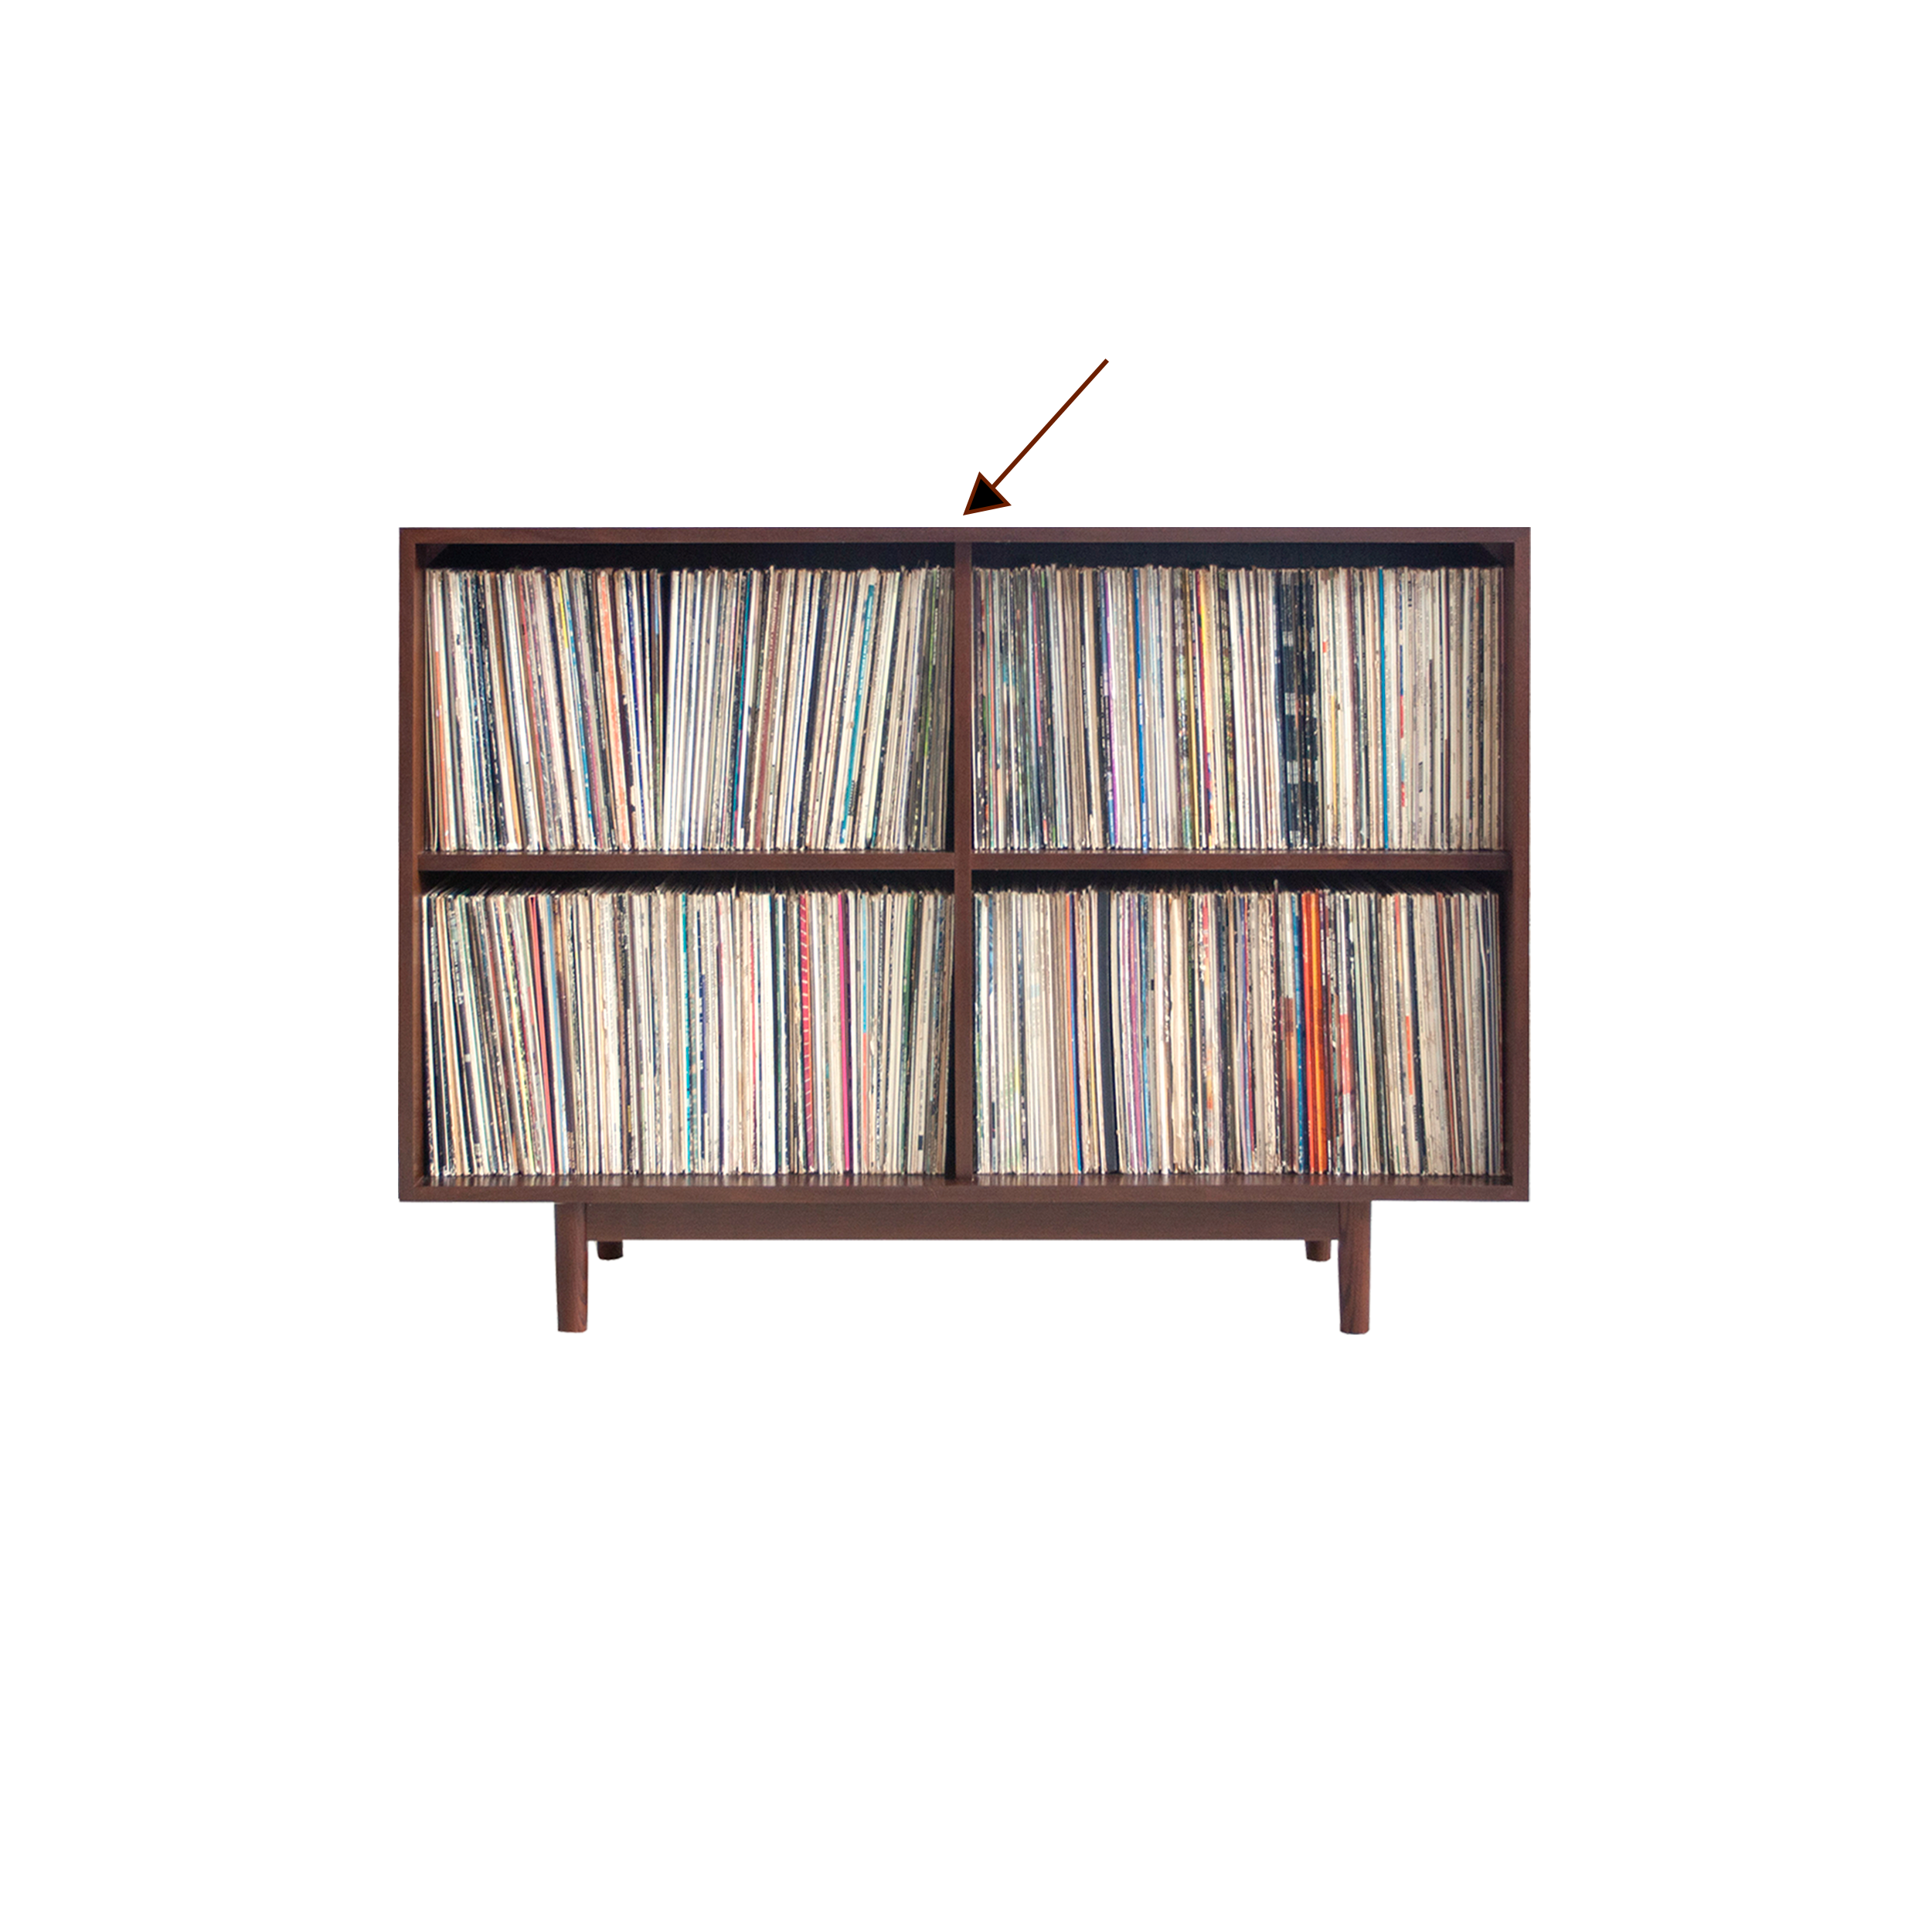 B-STOCK 48.25" 2 x 2 Record Storage Cabinet in Medium Walnut